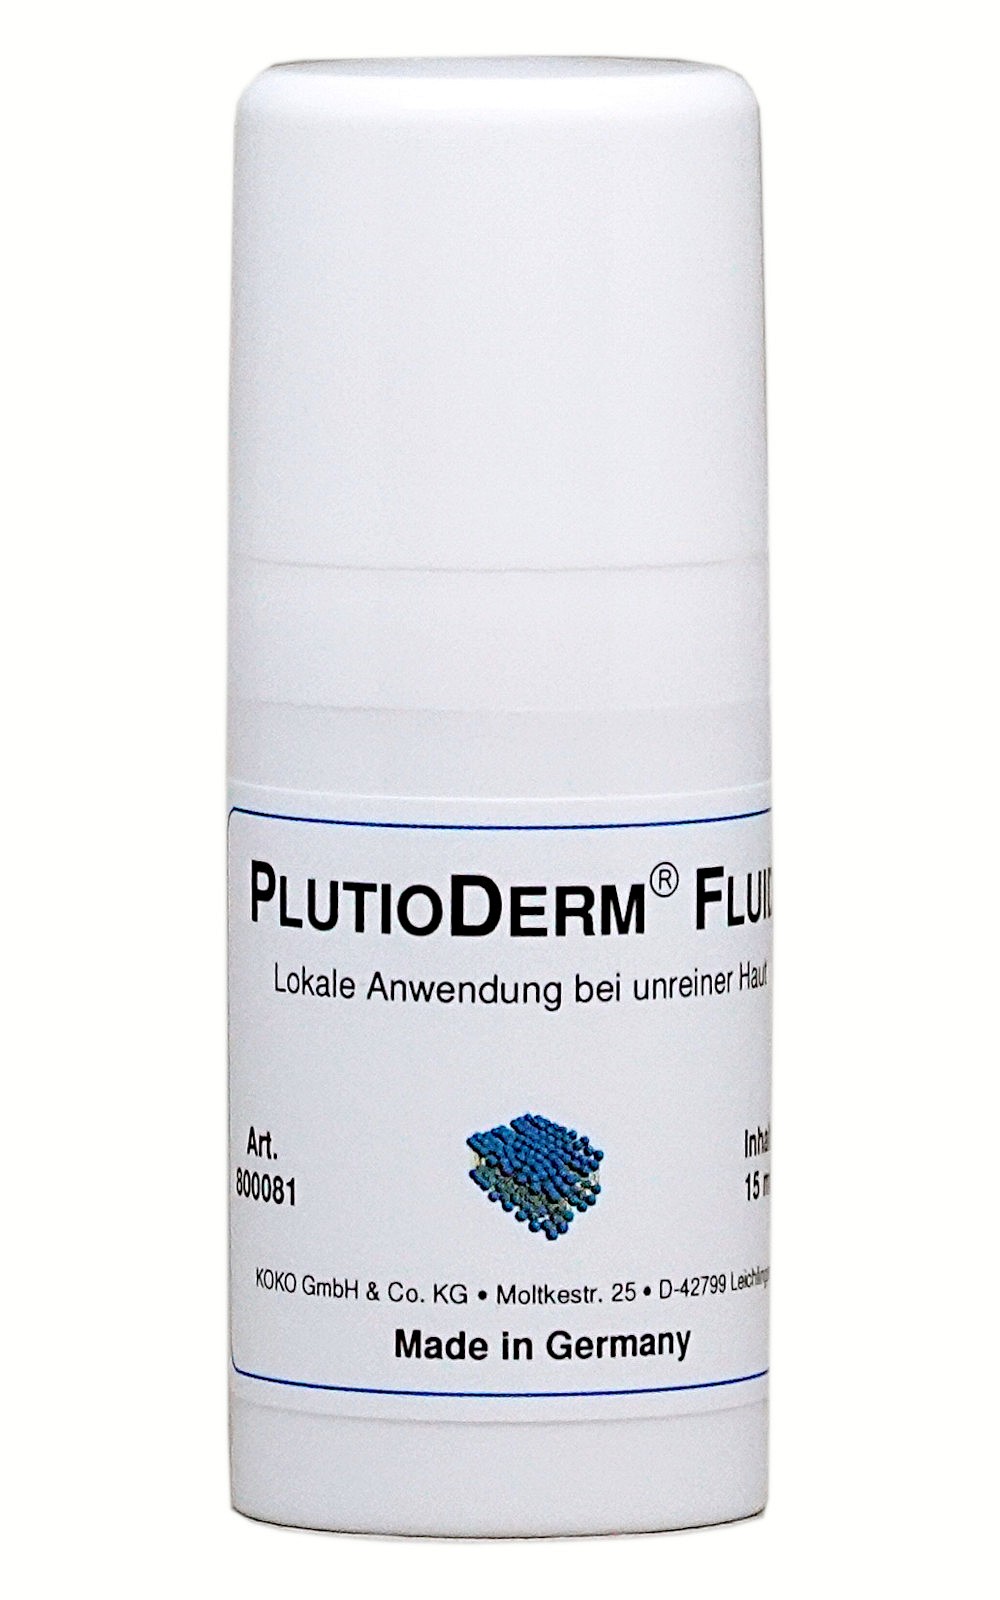 dermaviduals® Plutioderm_Fluid_15ml